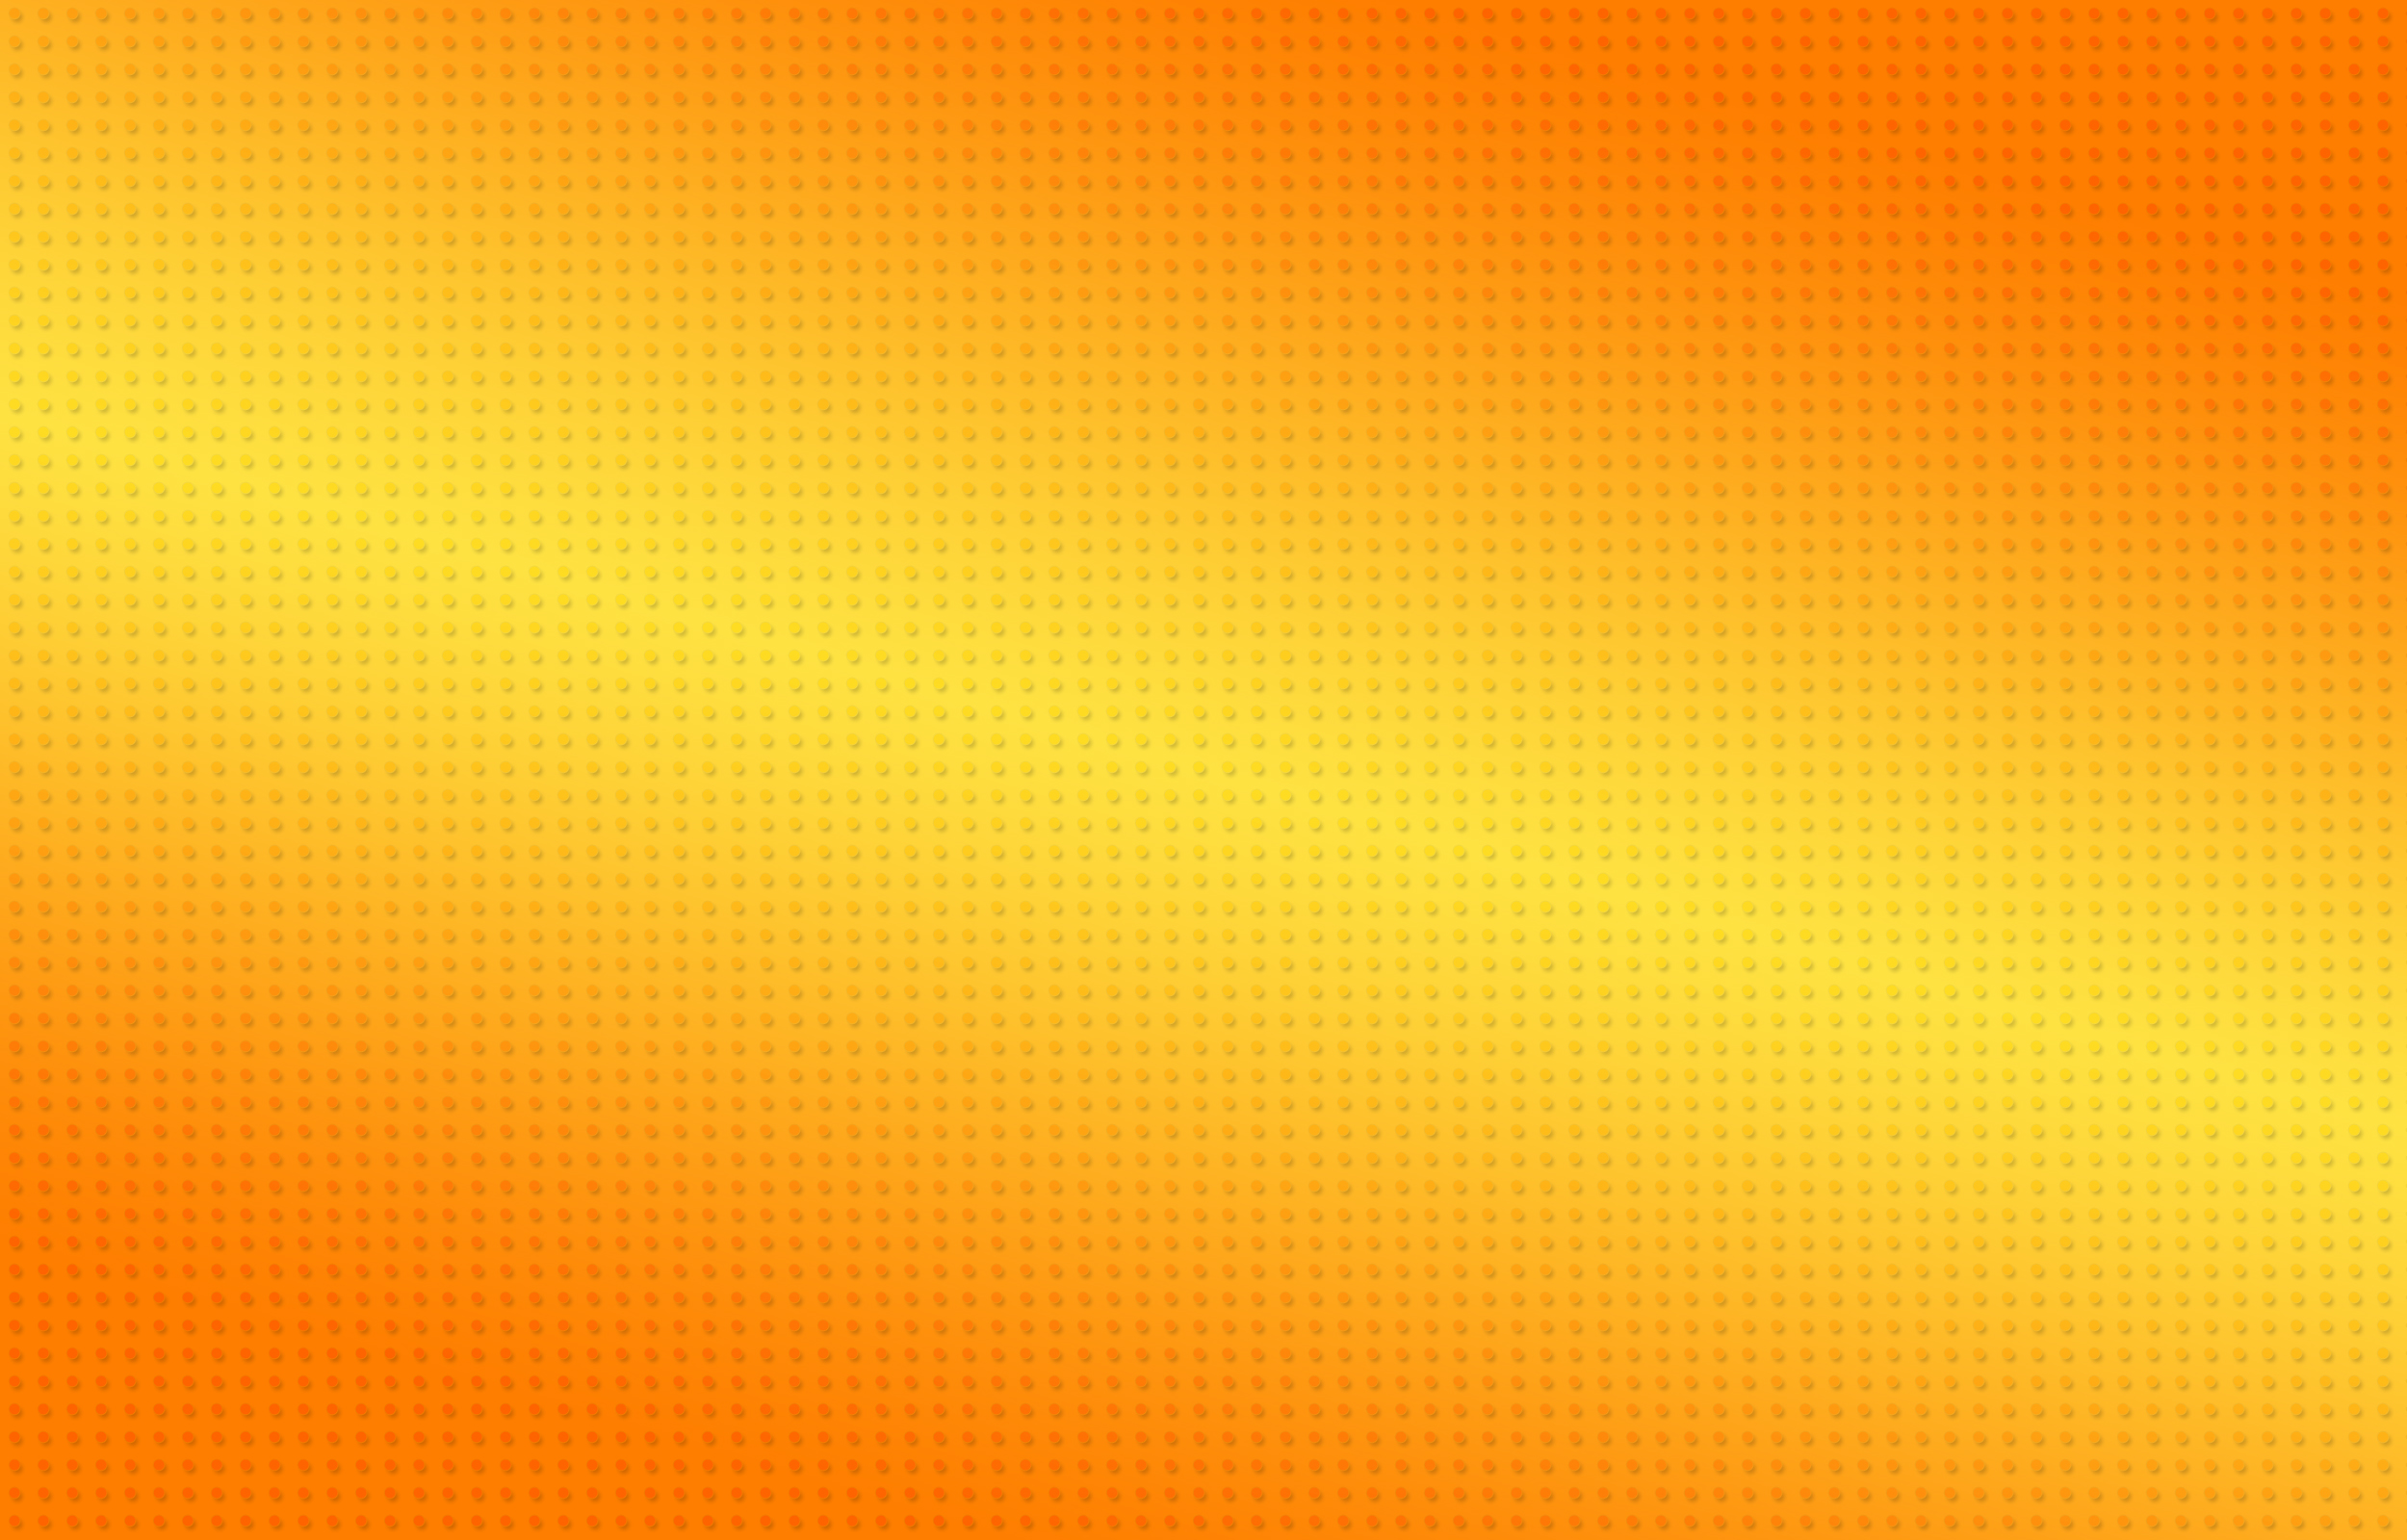 Orange Plain Yellow Background Wallpaper Download